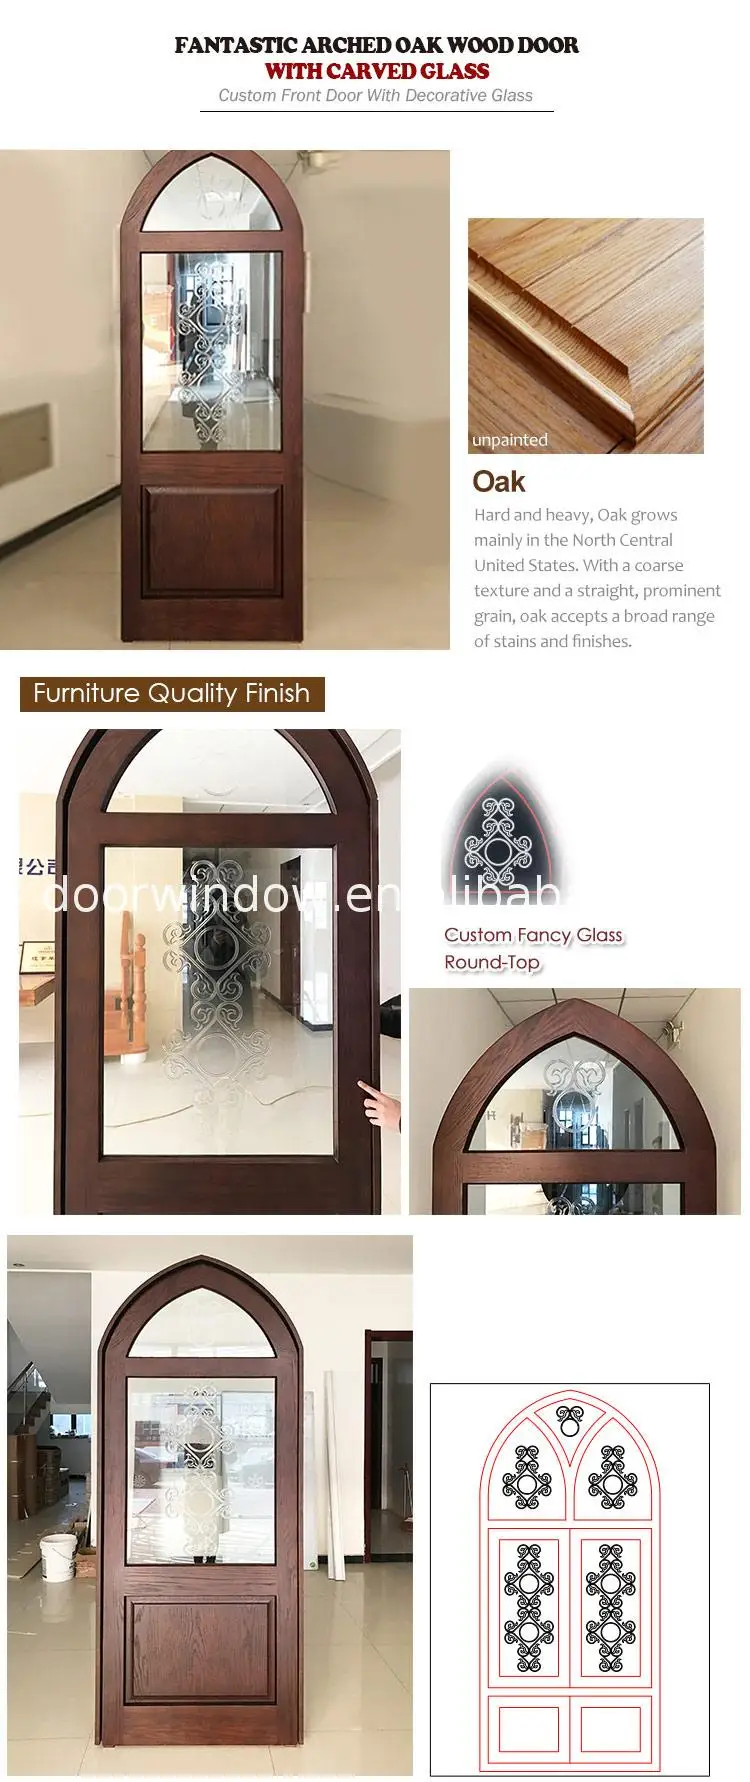 Hot selling product new front entry door modern doors handles